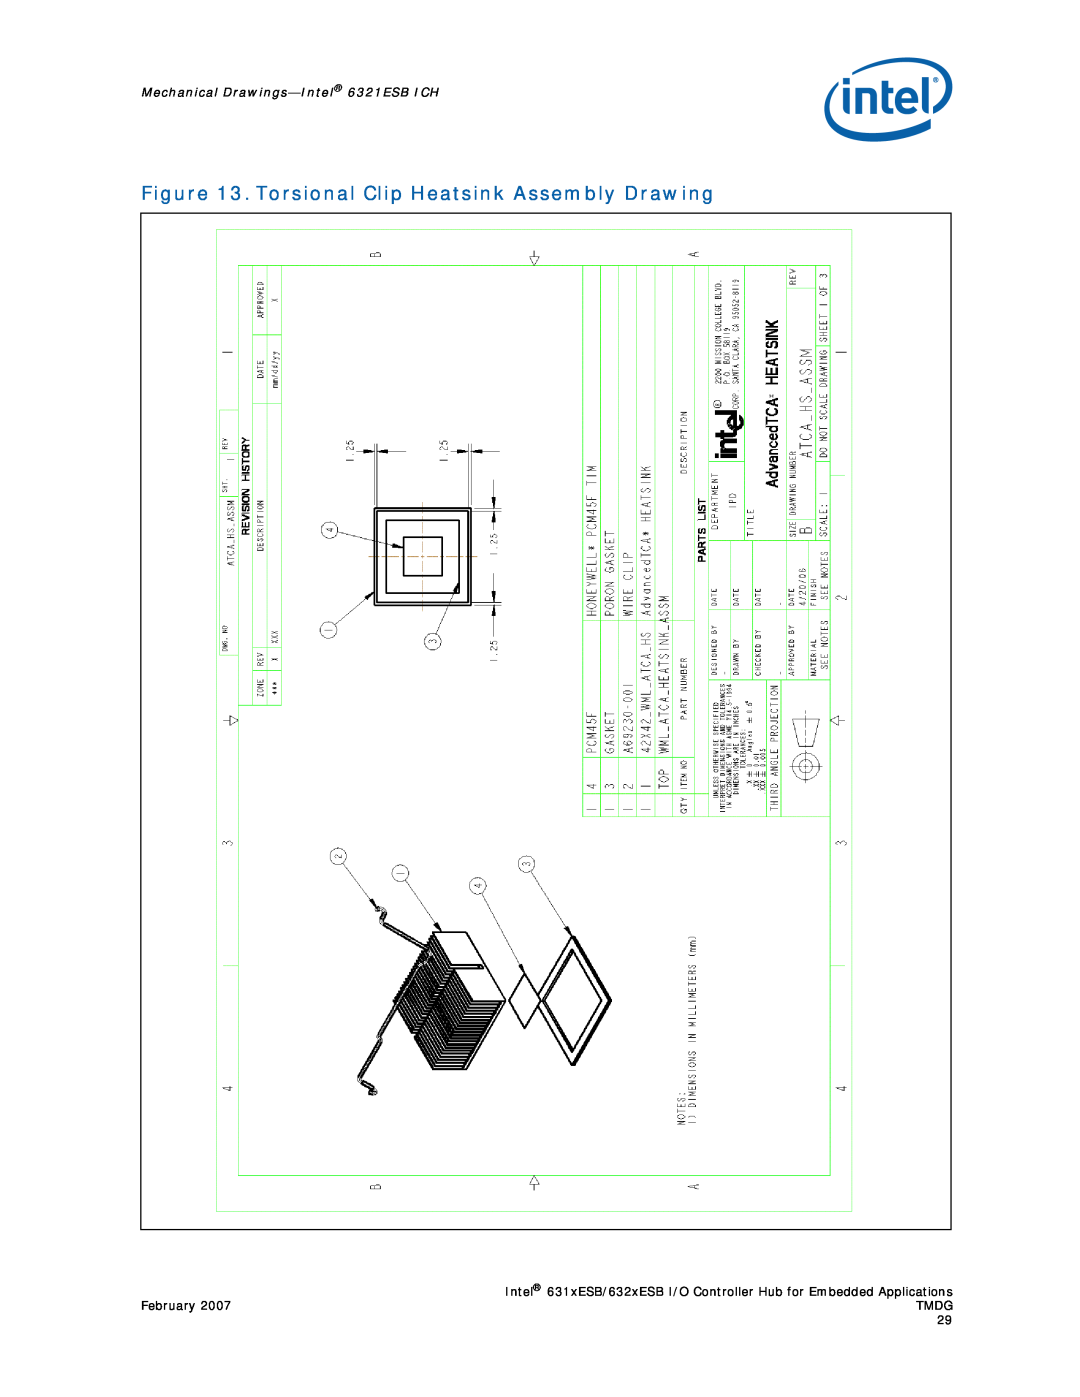 Intel 632xESB, 631xESB manual Torsional Clip Heatsink Assembly Drawing, Mechanical Drawings-Intel 6321ESB ICH 